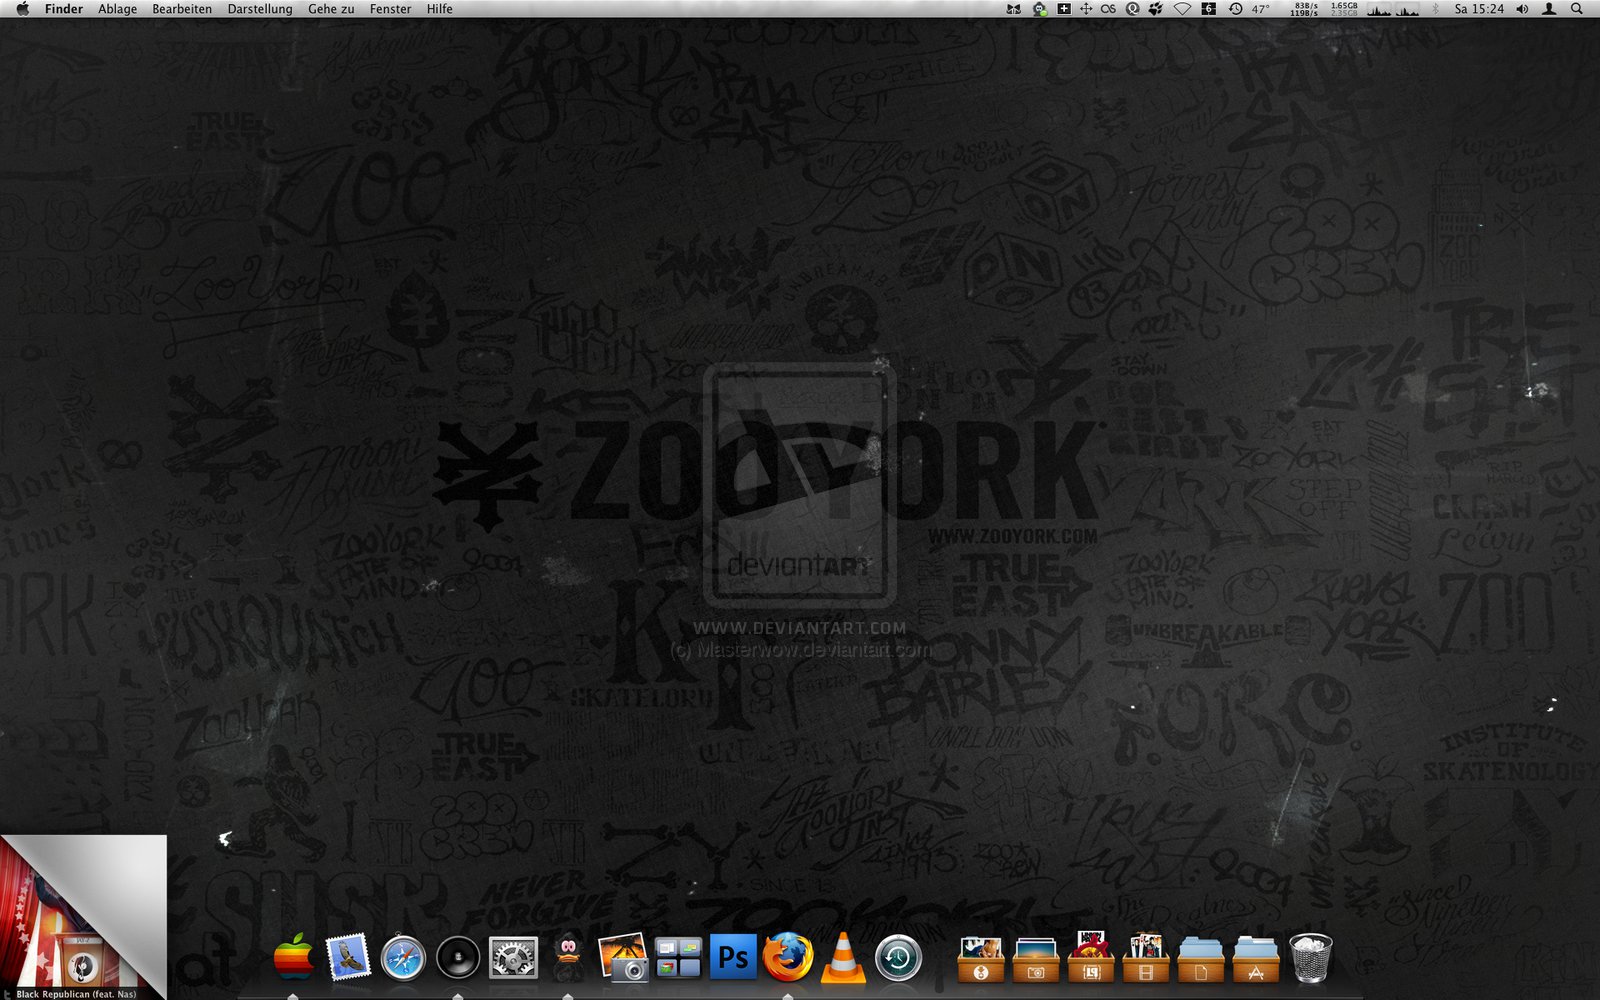 Zoo York Logo Wallpaper By Masterwow